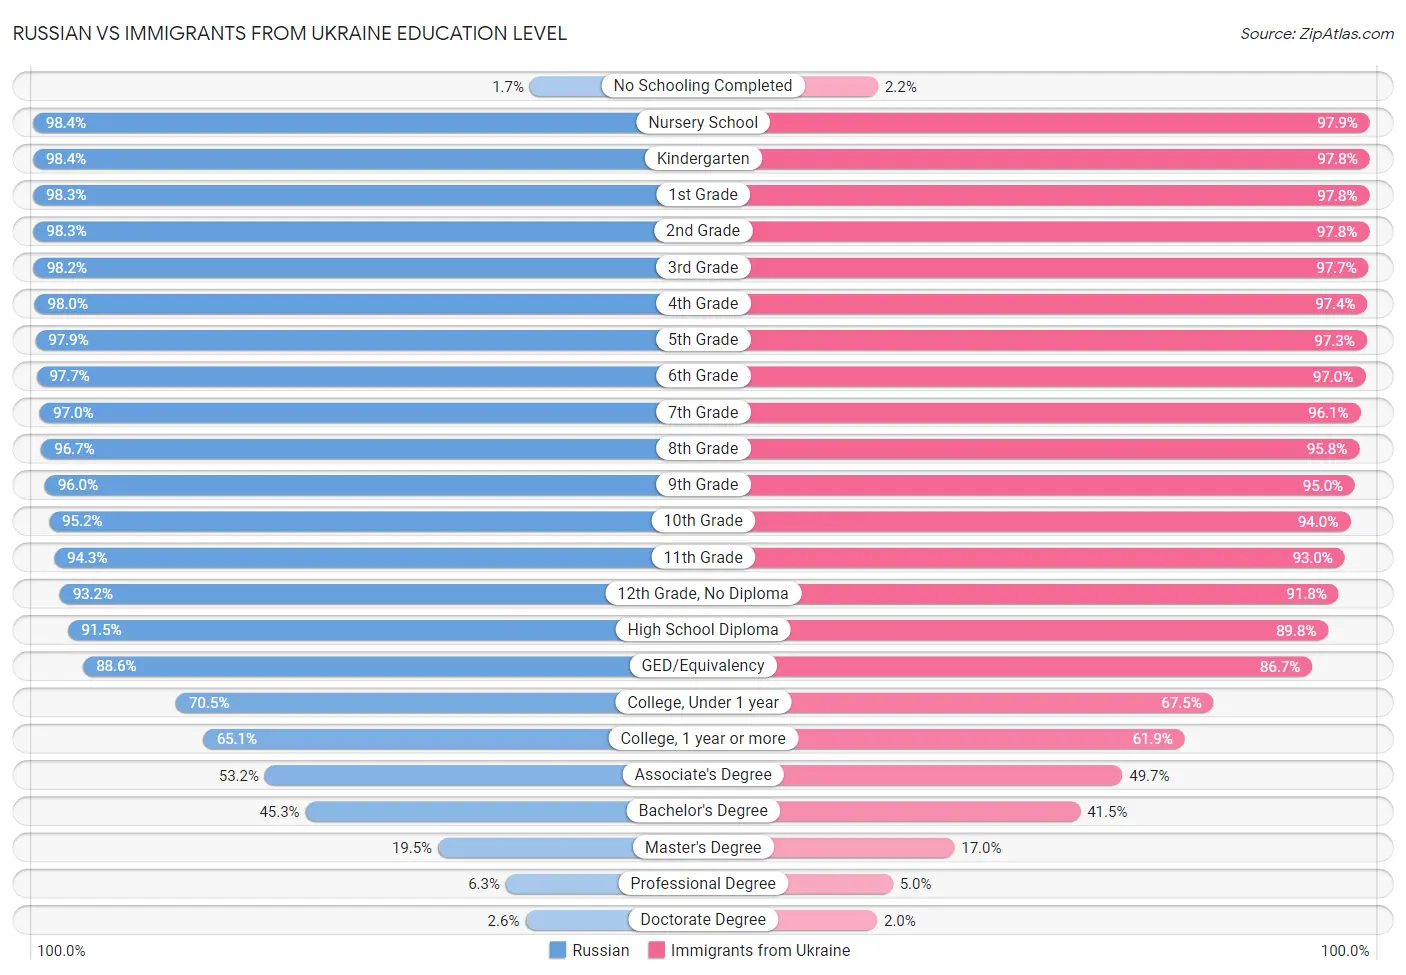 Russian vs Immigrants from Ukraine Education Level